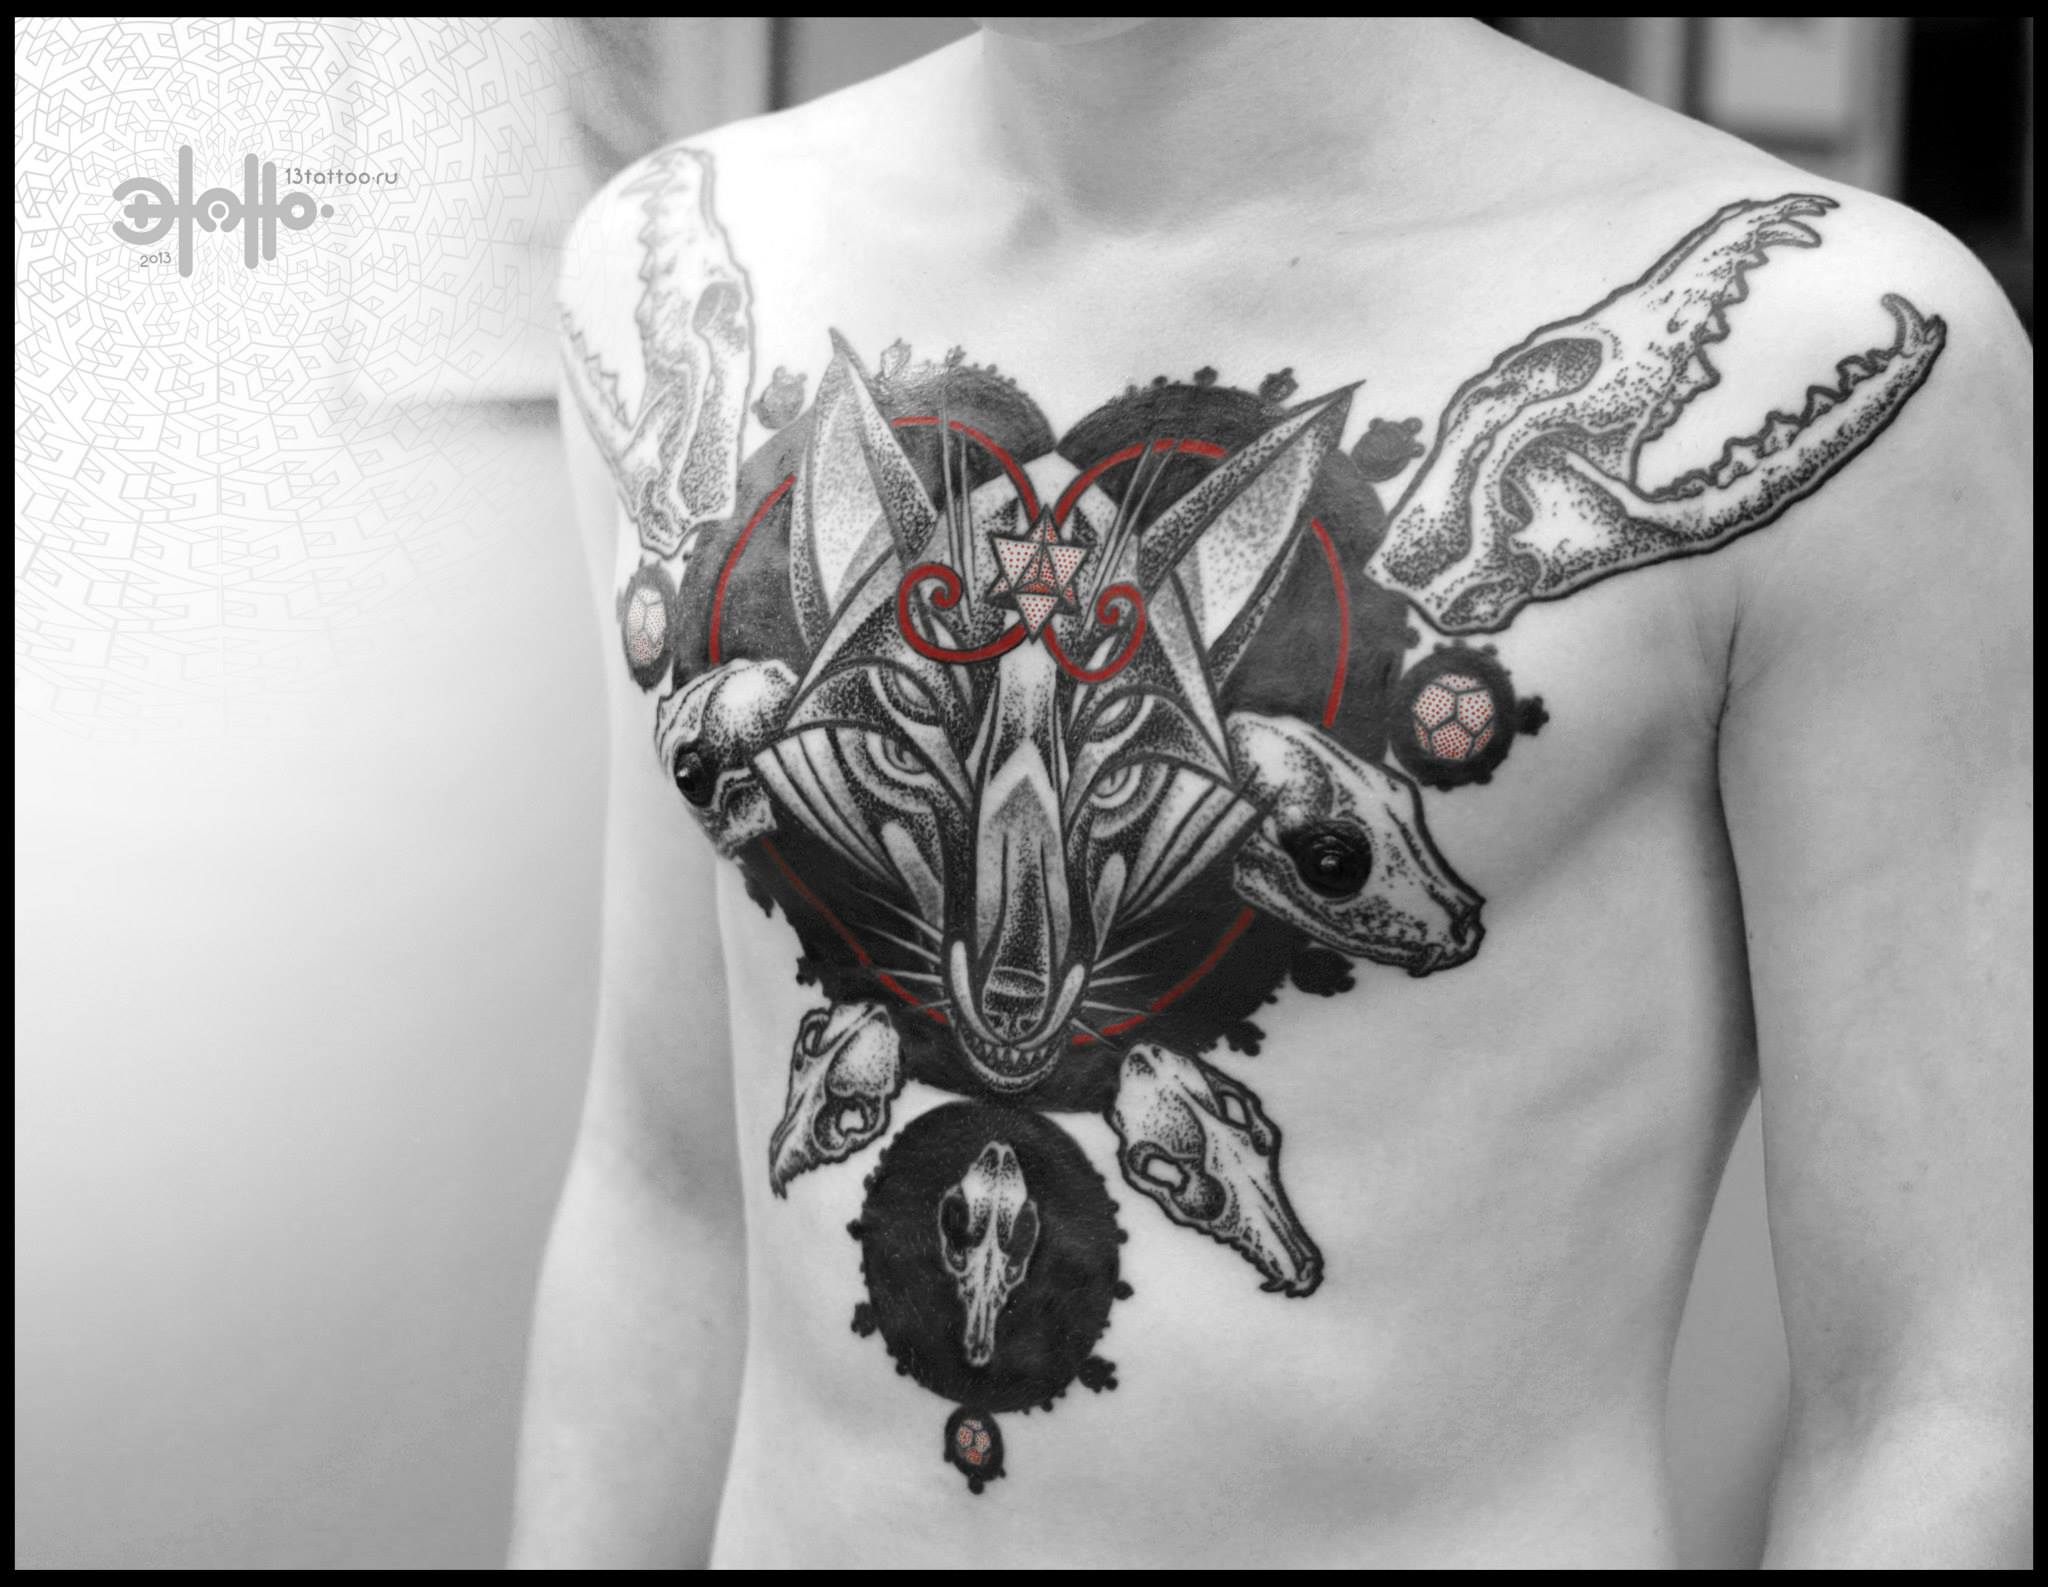 Maks Журавлев, tattoo artist - vlist (29)